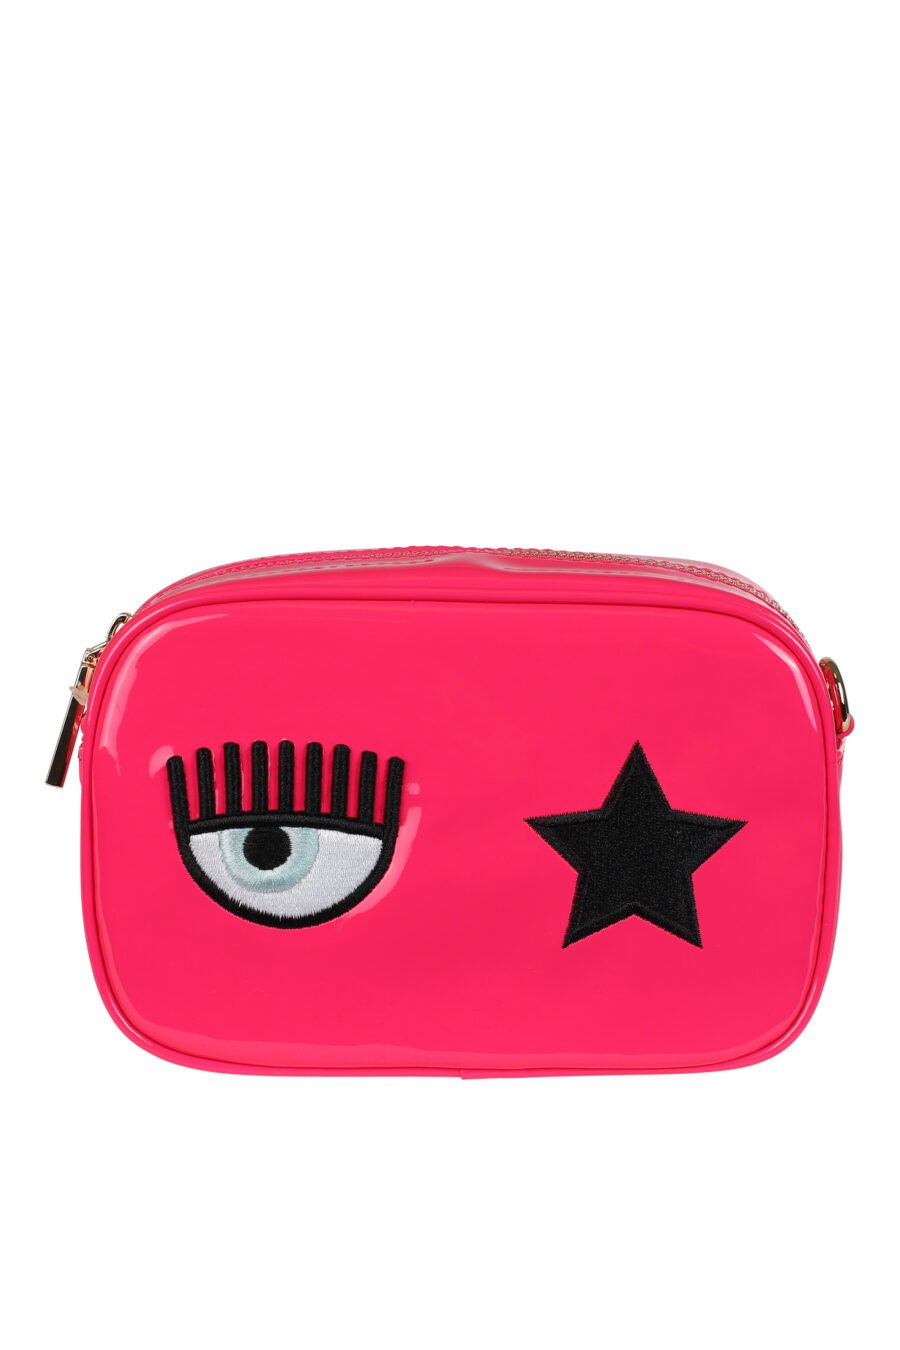 Fuchsia shoulder bag with eye and star logo - 8052672352408